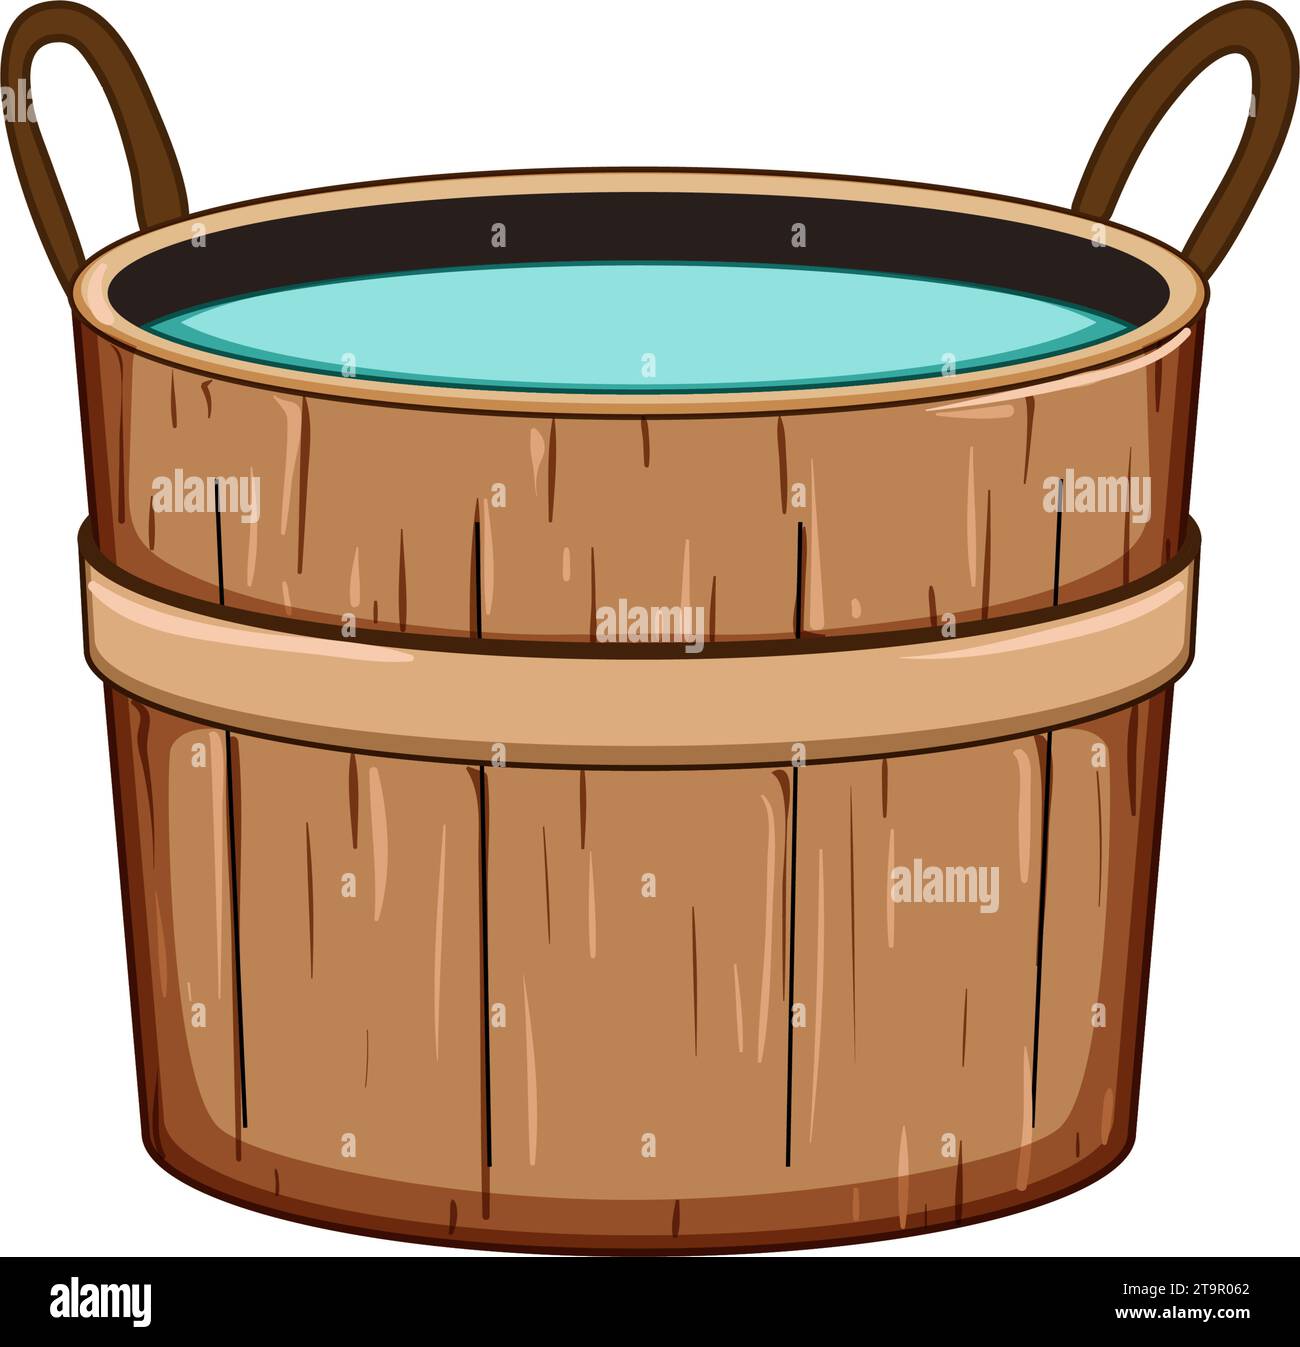 wood wooden tub cartoon vector illustration Stock Vector